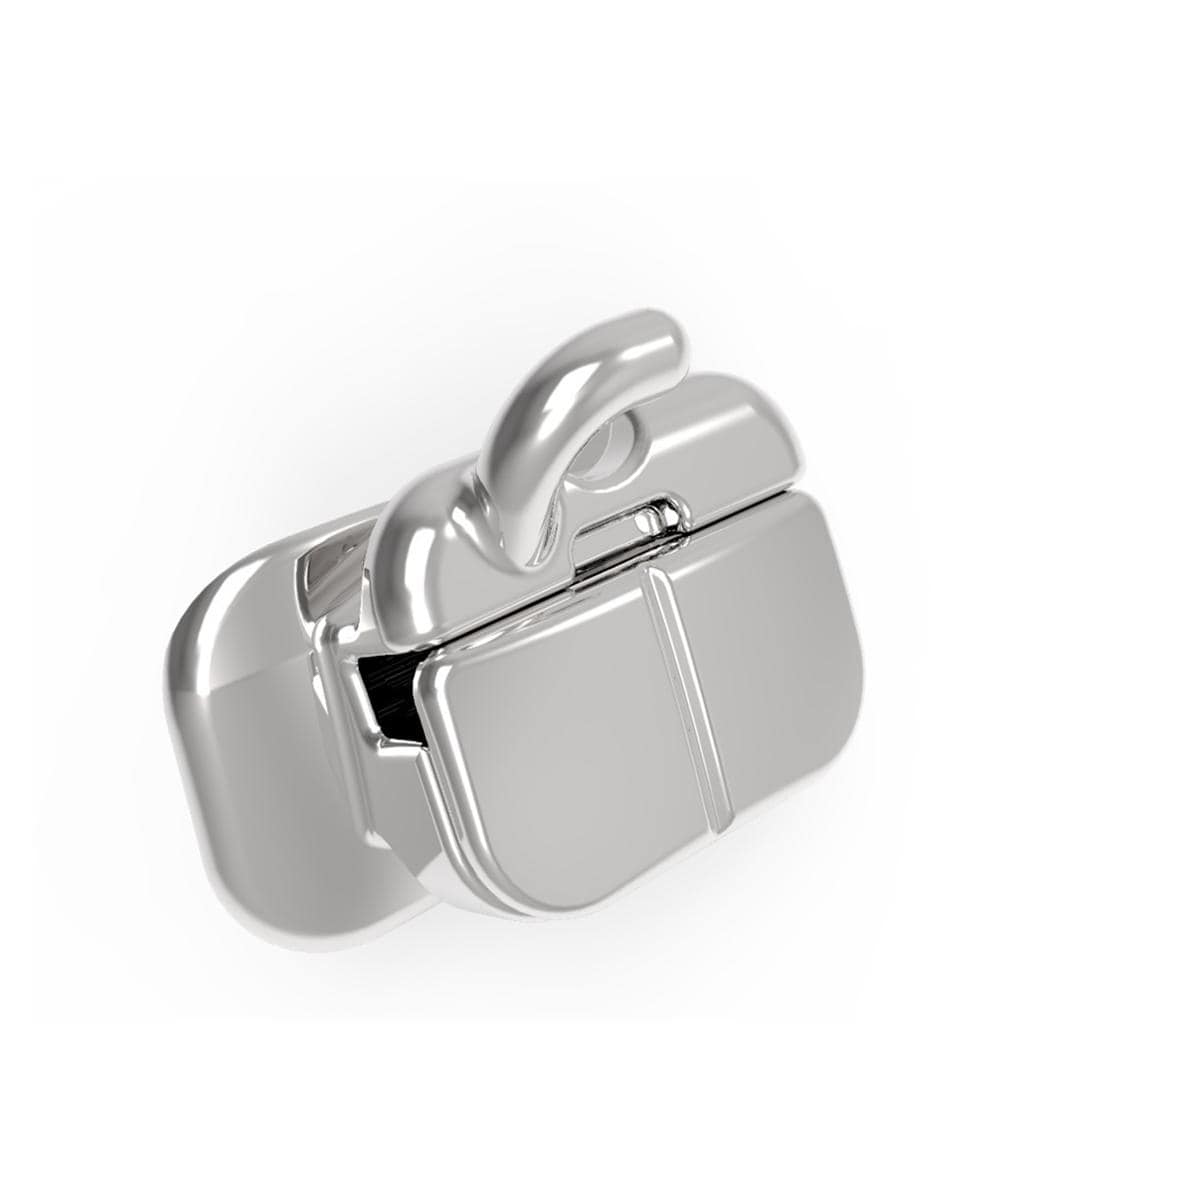 CARRIERE SLX 3D Metal Self Ligating Bracket .022 - LL6 HK (977-LL6-HK-10), 10 stuks